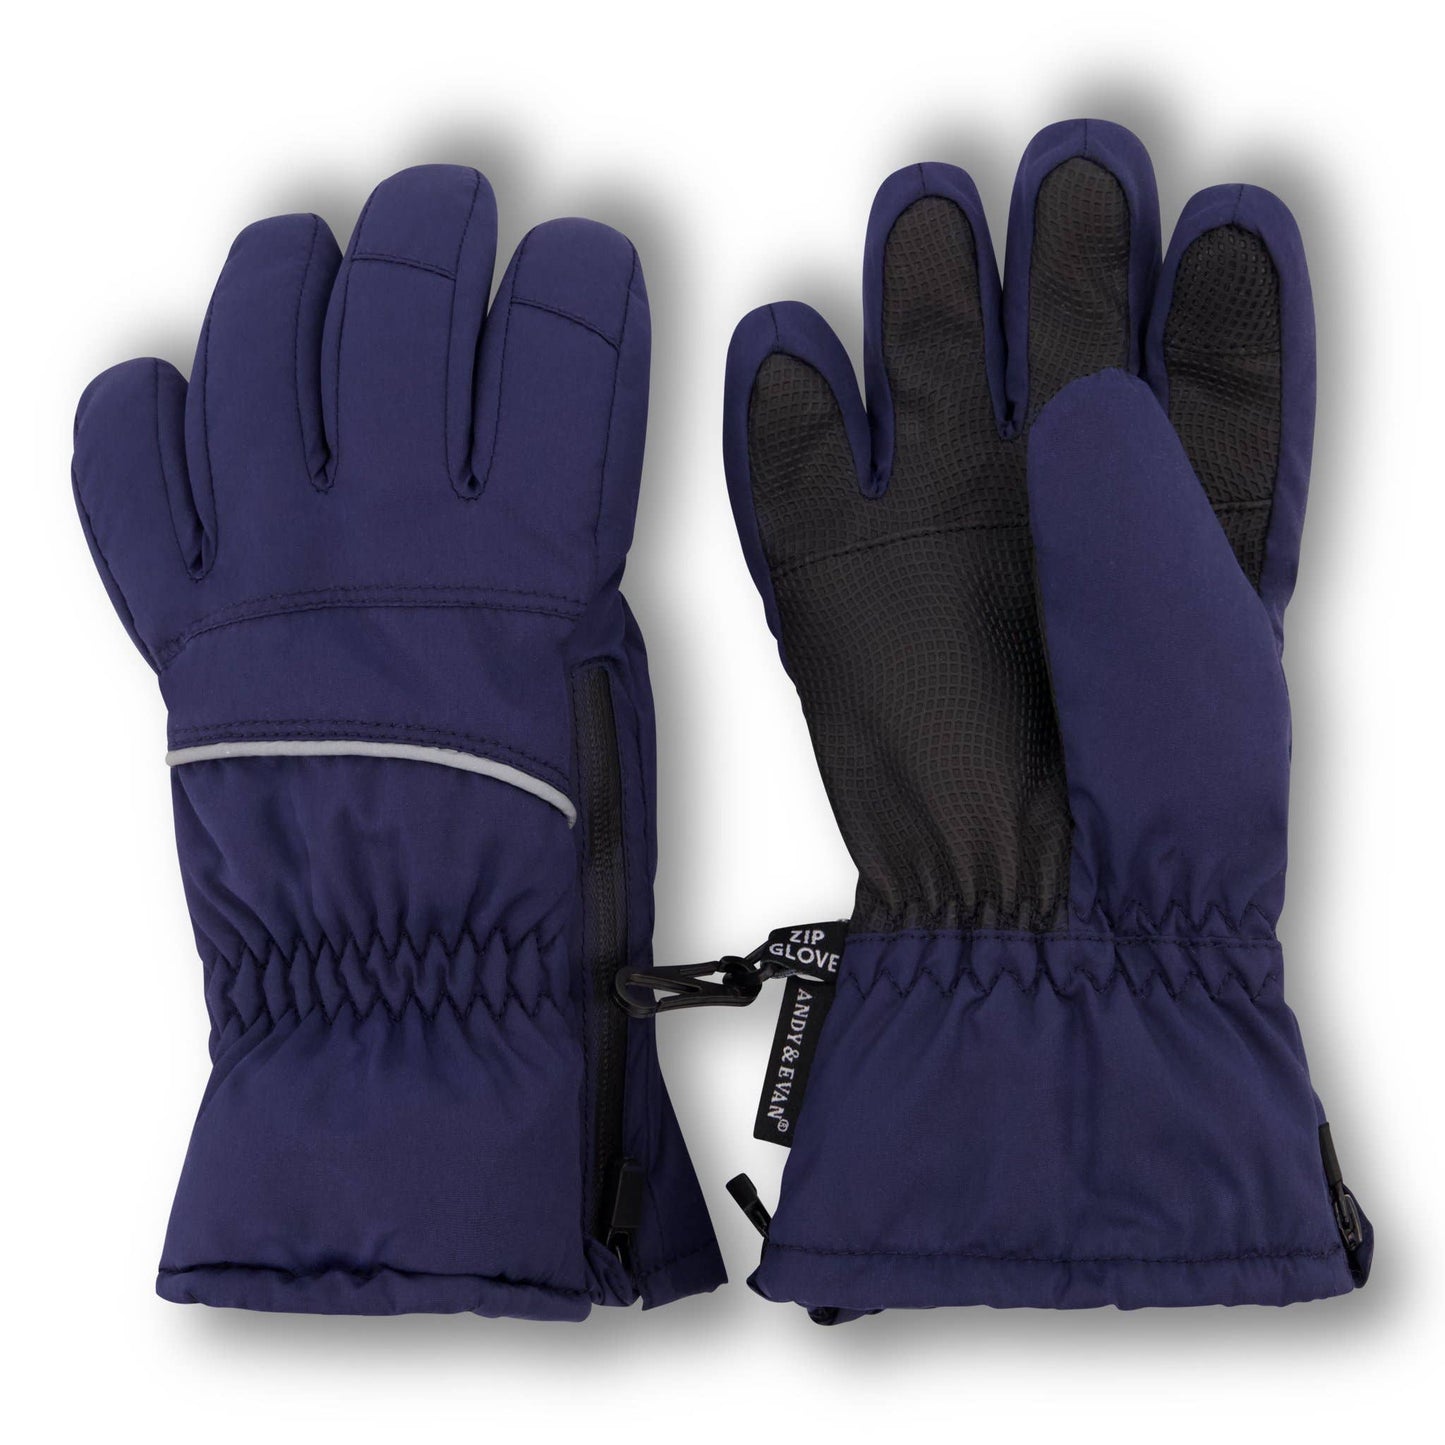 Winter & Ski Glove Powered by ZIPGLOVE™ TECHNOLOGY - Navy